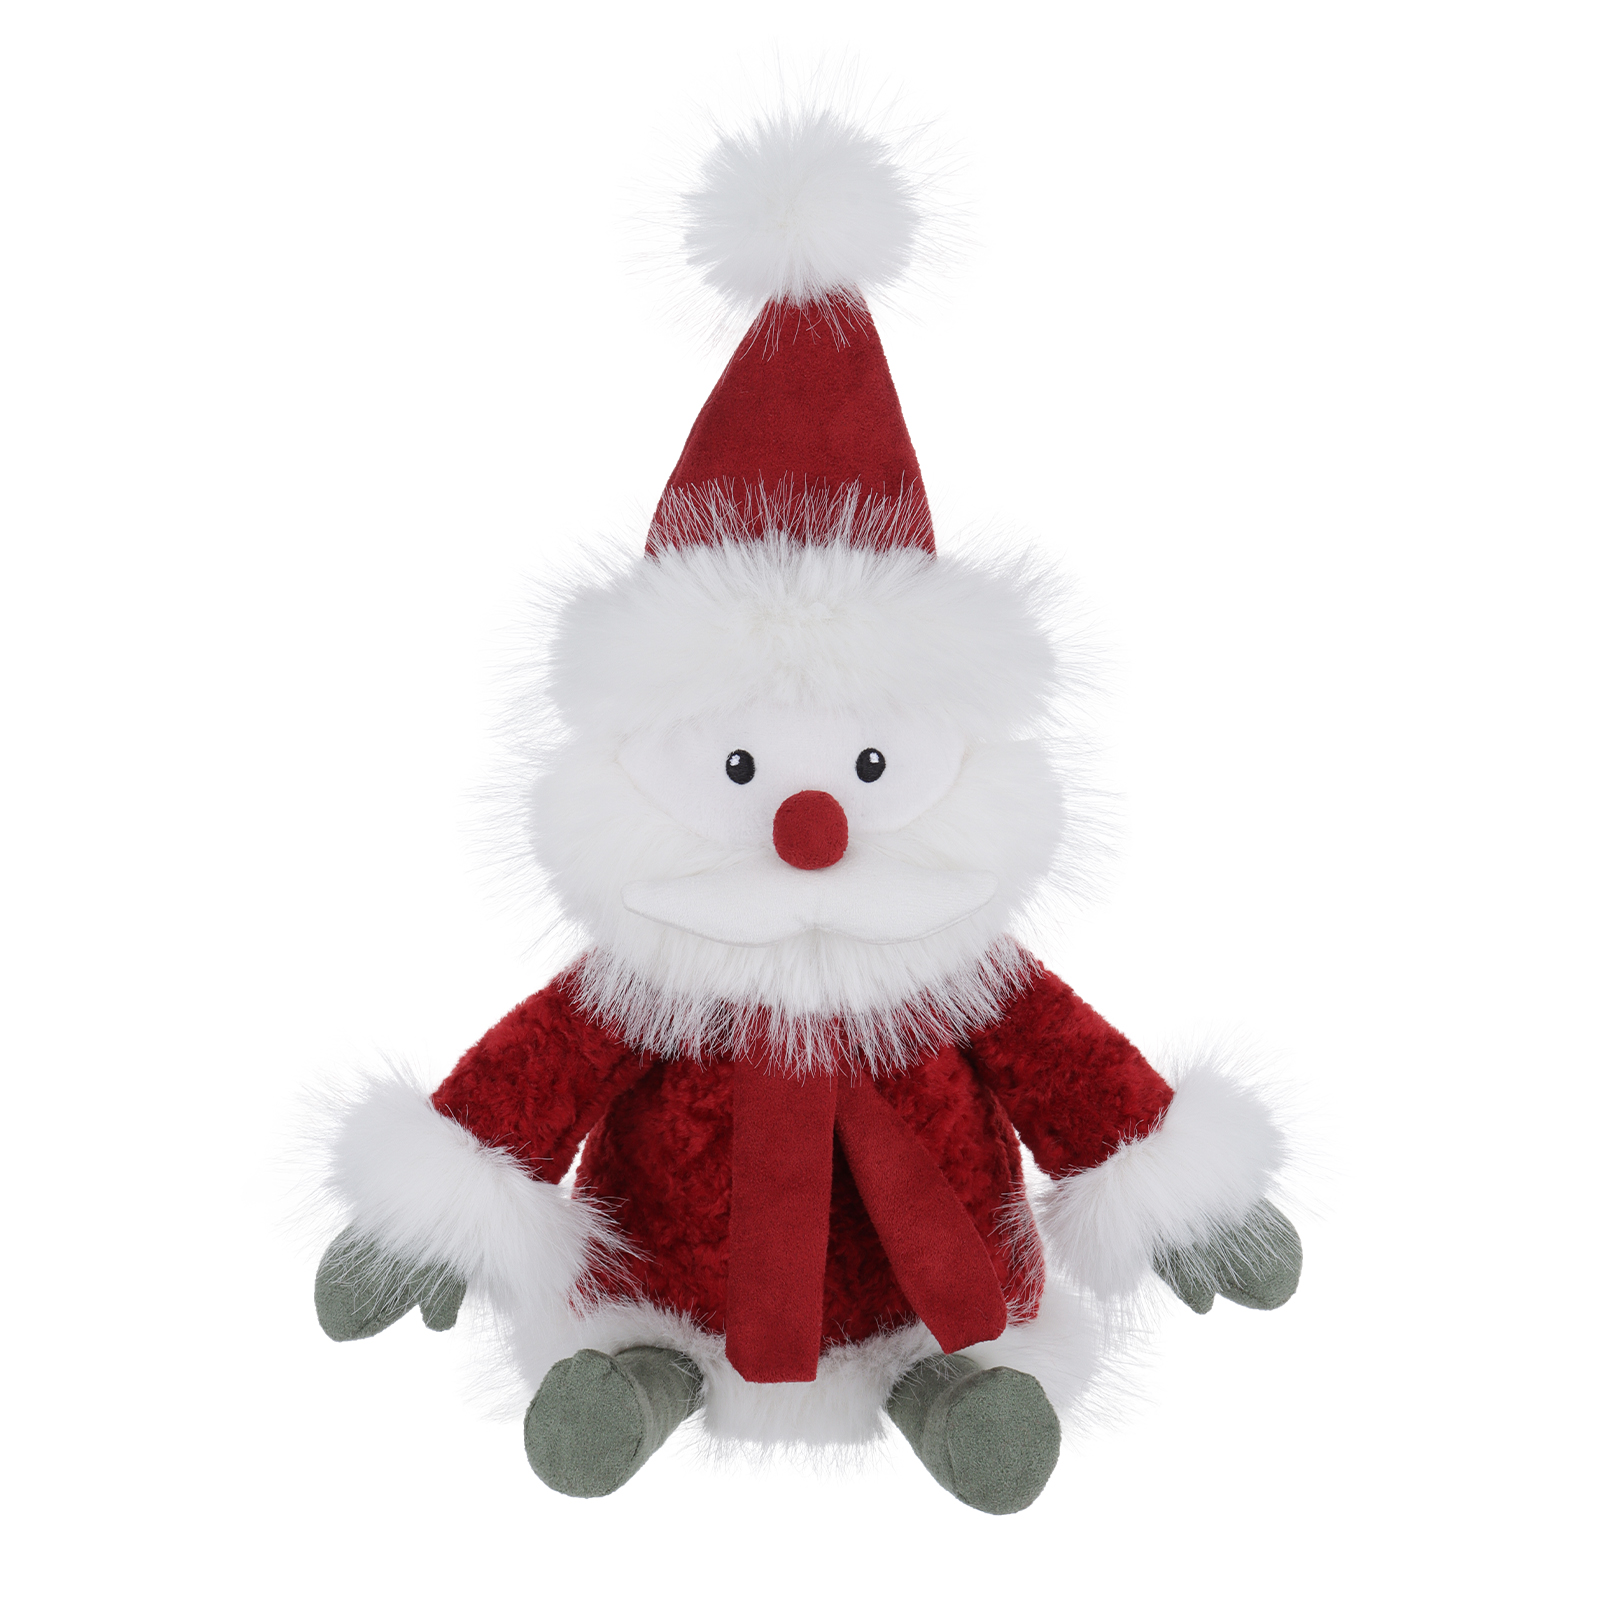 Apricot Reme te hotoke Santa Stuffed Animal Soft Plush Toys